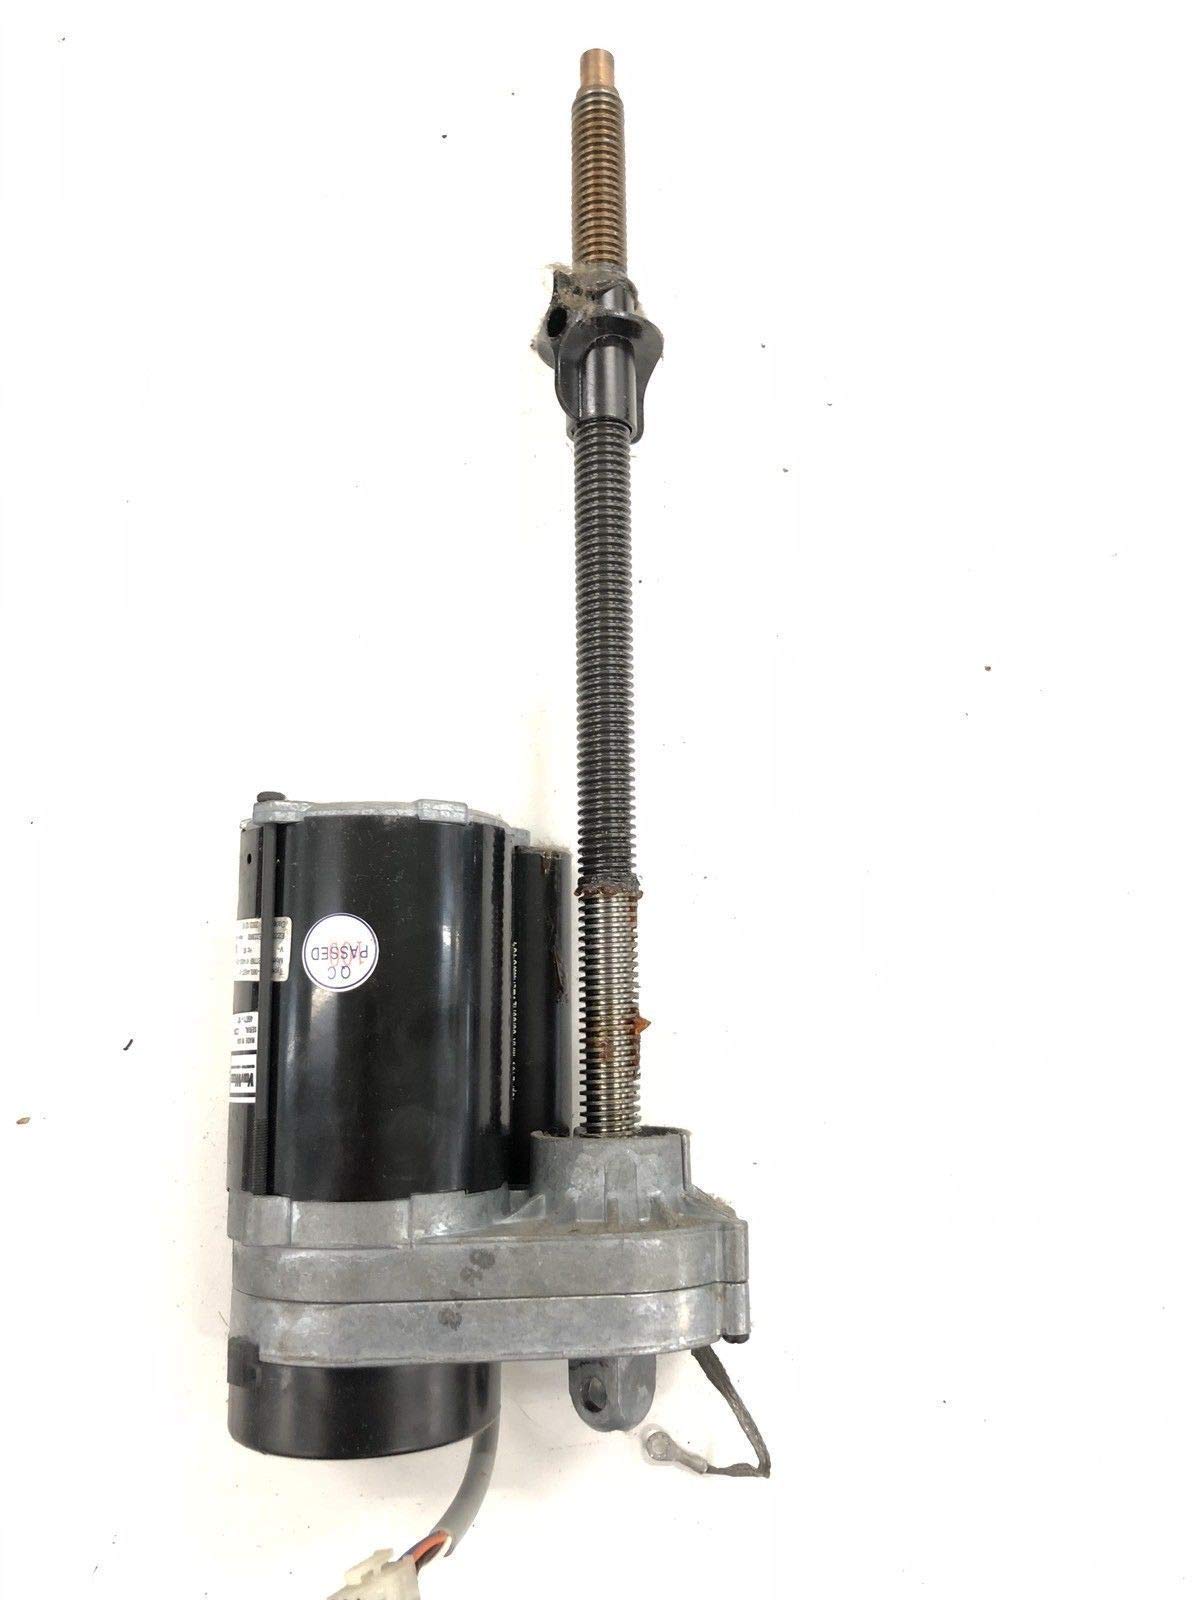 Incline Elevation Motor Actuator